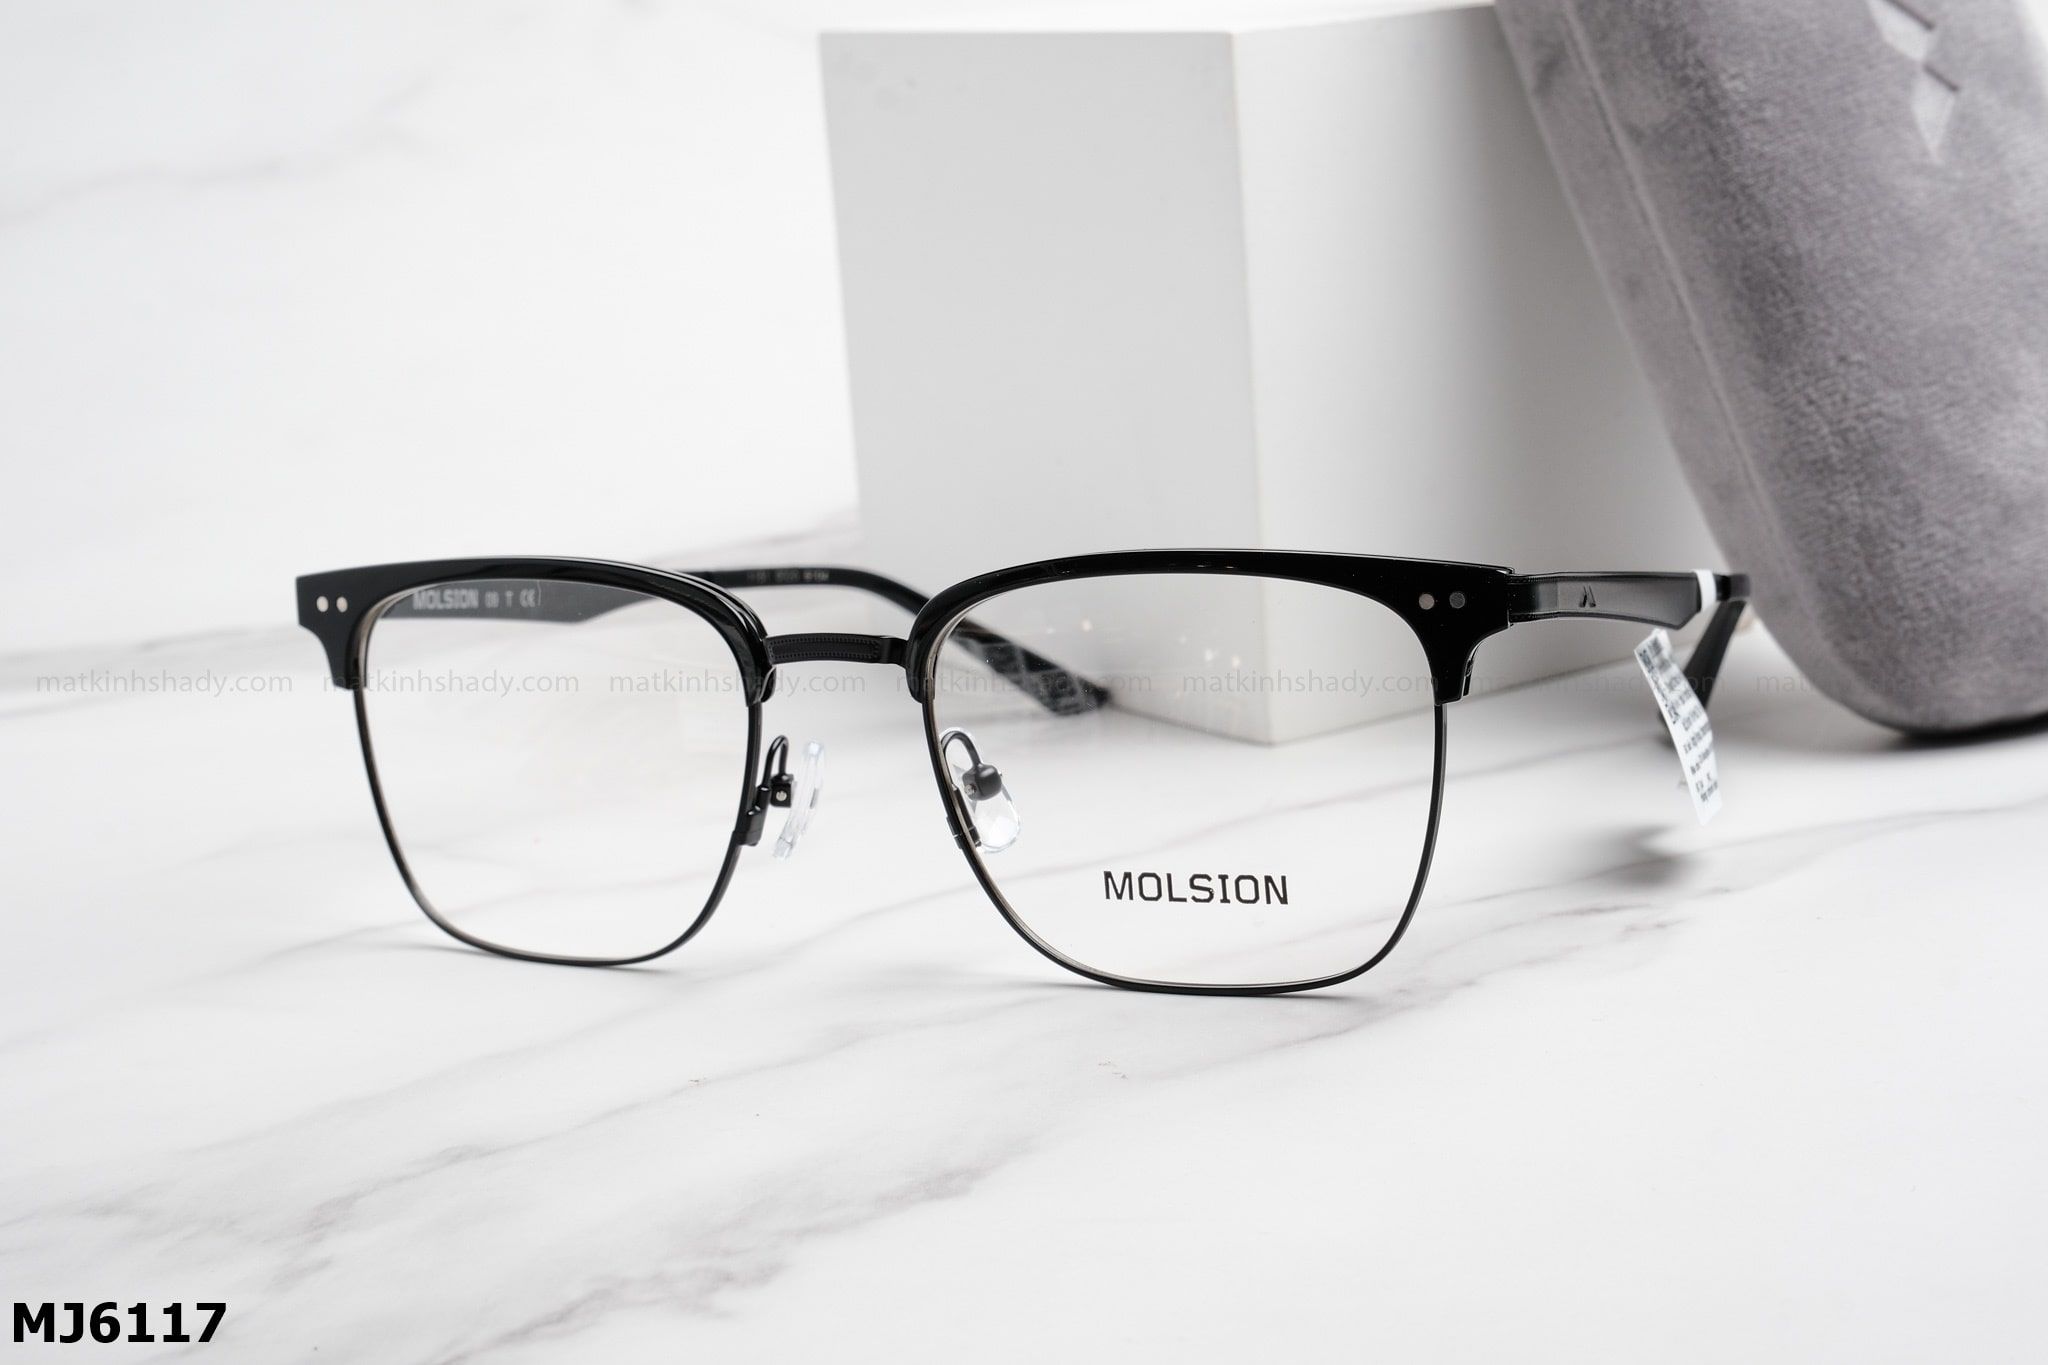  Molsion Eyewear - Glasses - MJ6117 